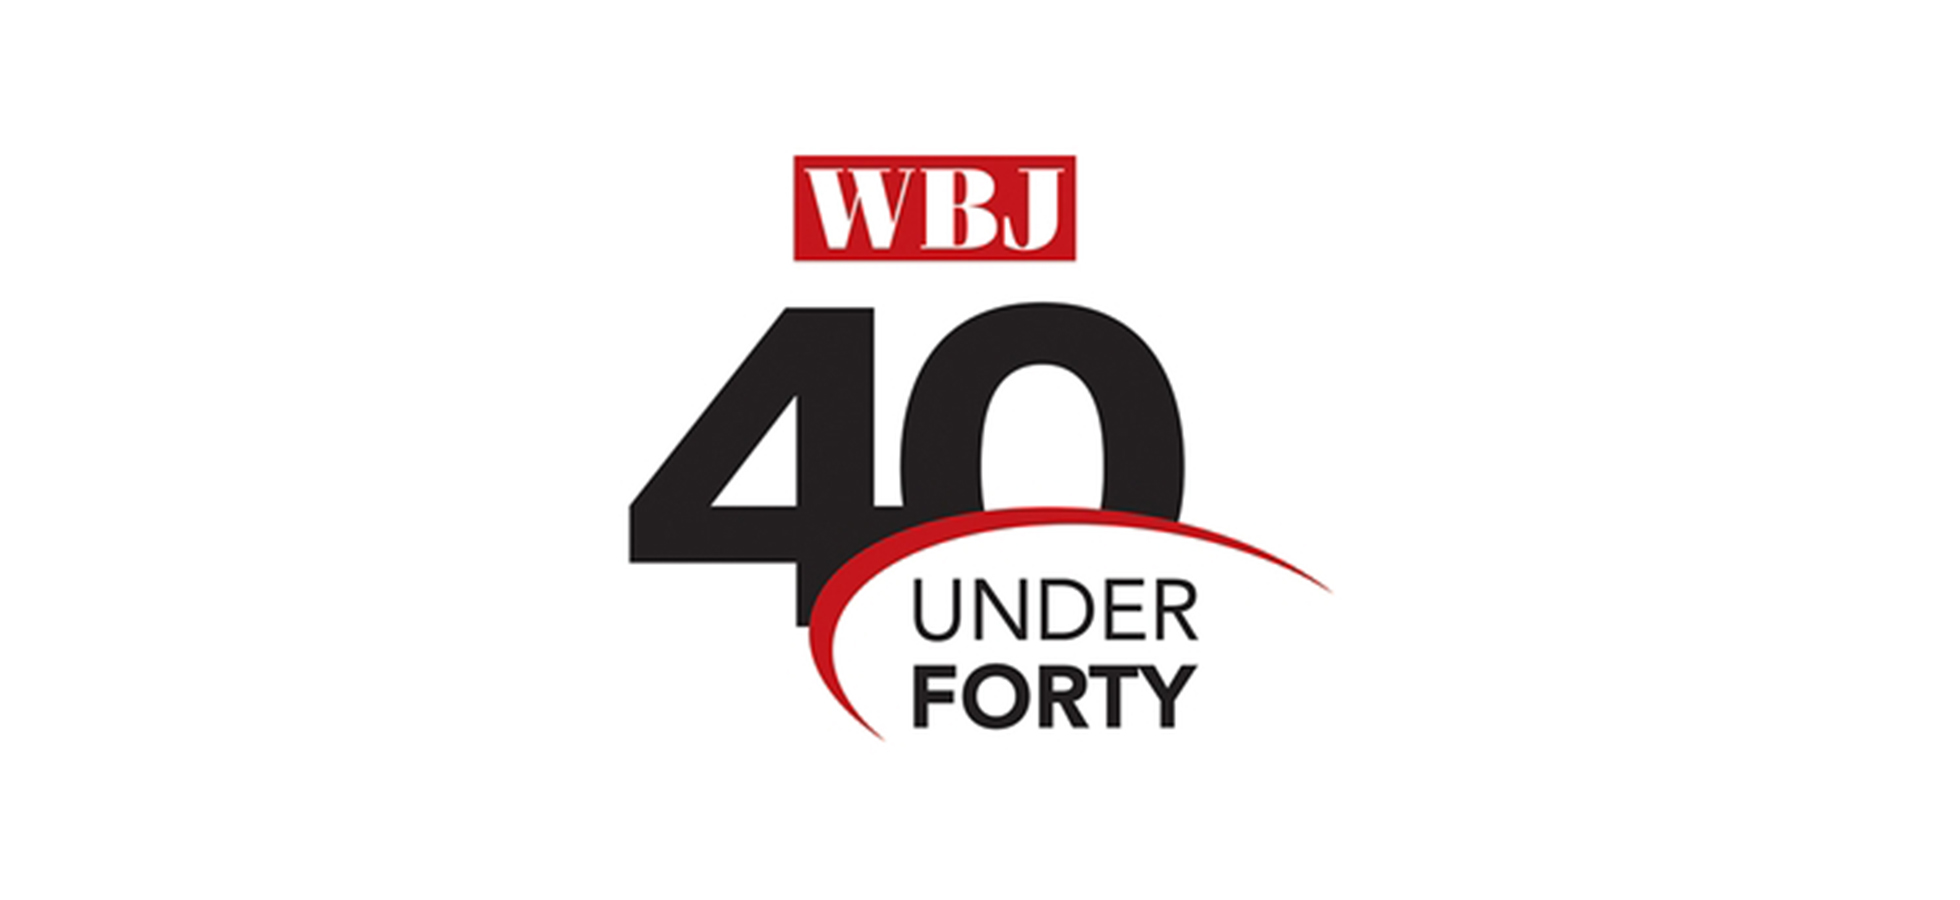 Six Assumption Alumni Named to WBJ’s 40 Under Forty List